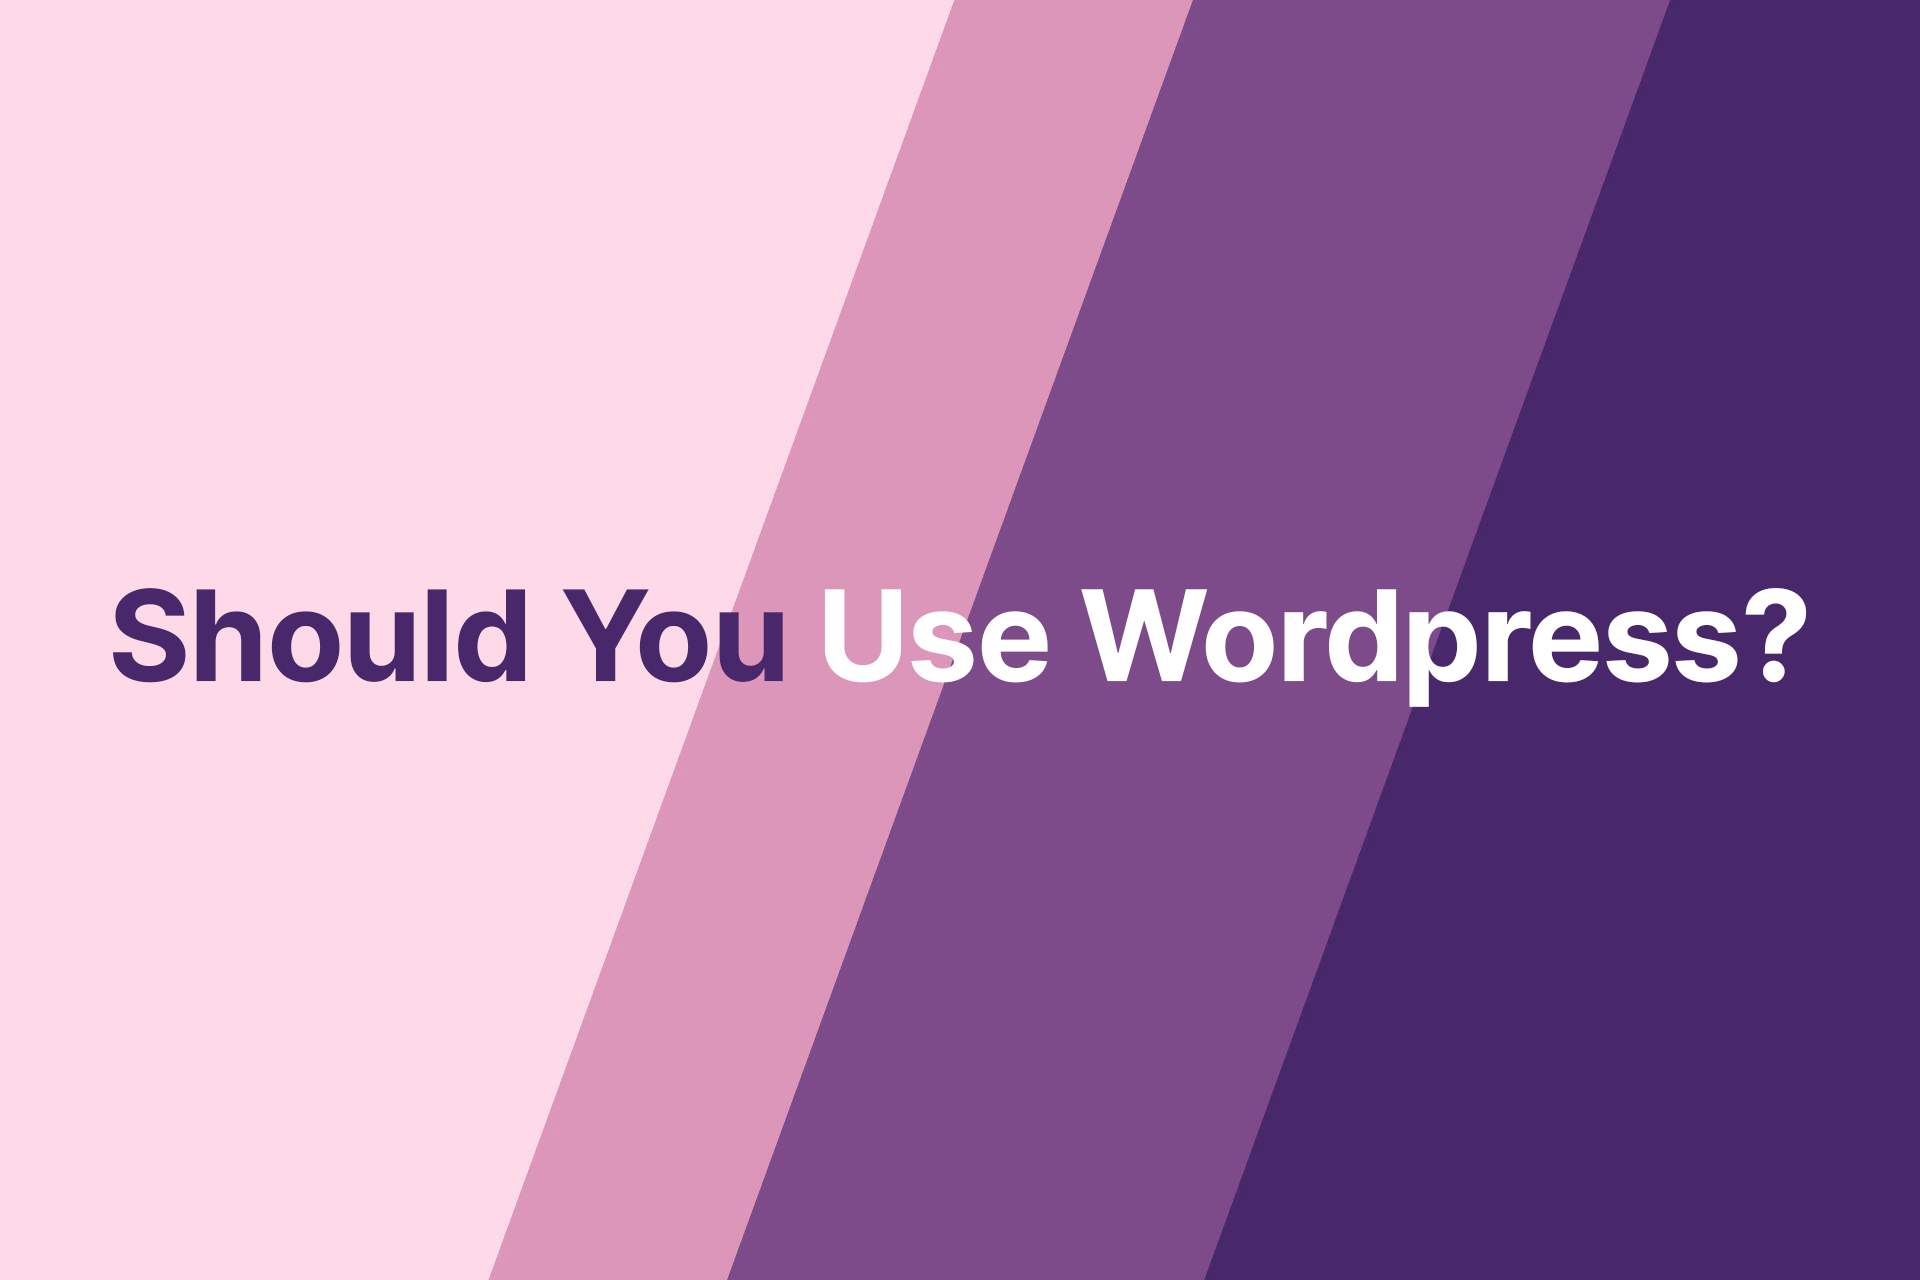 Should You Use Wordpress?